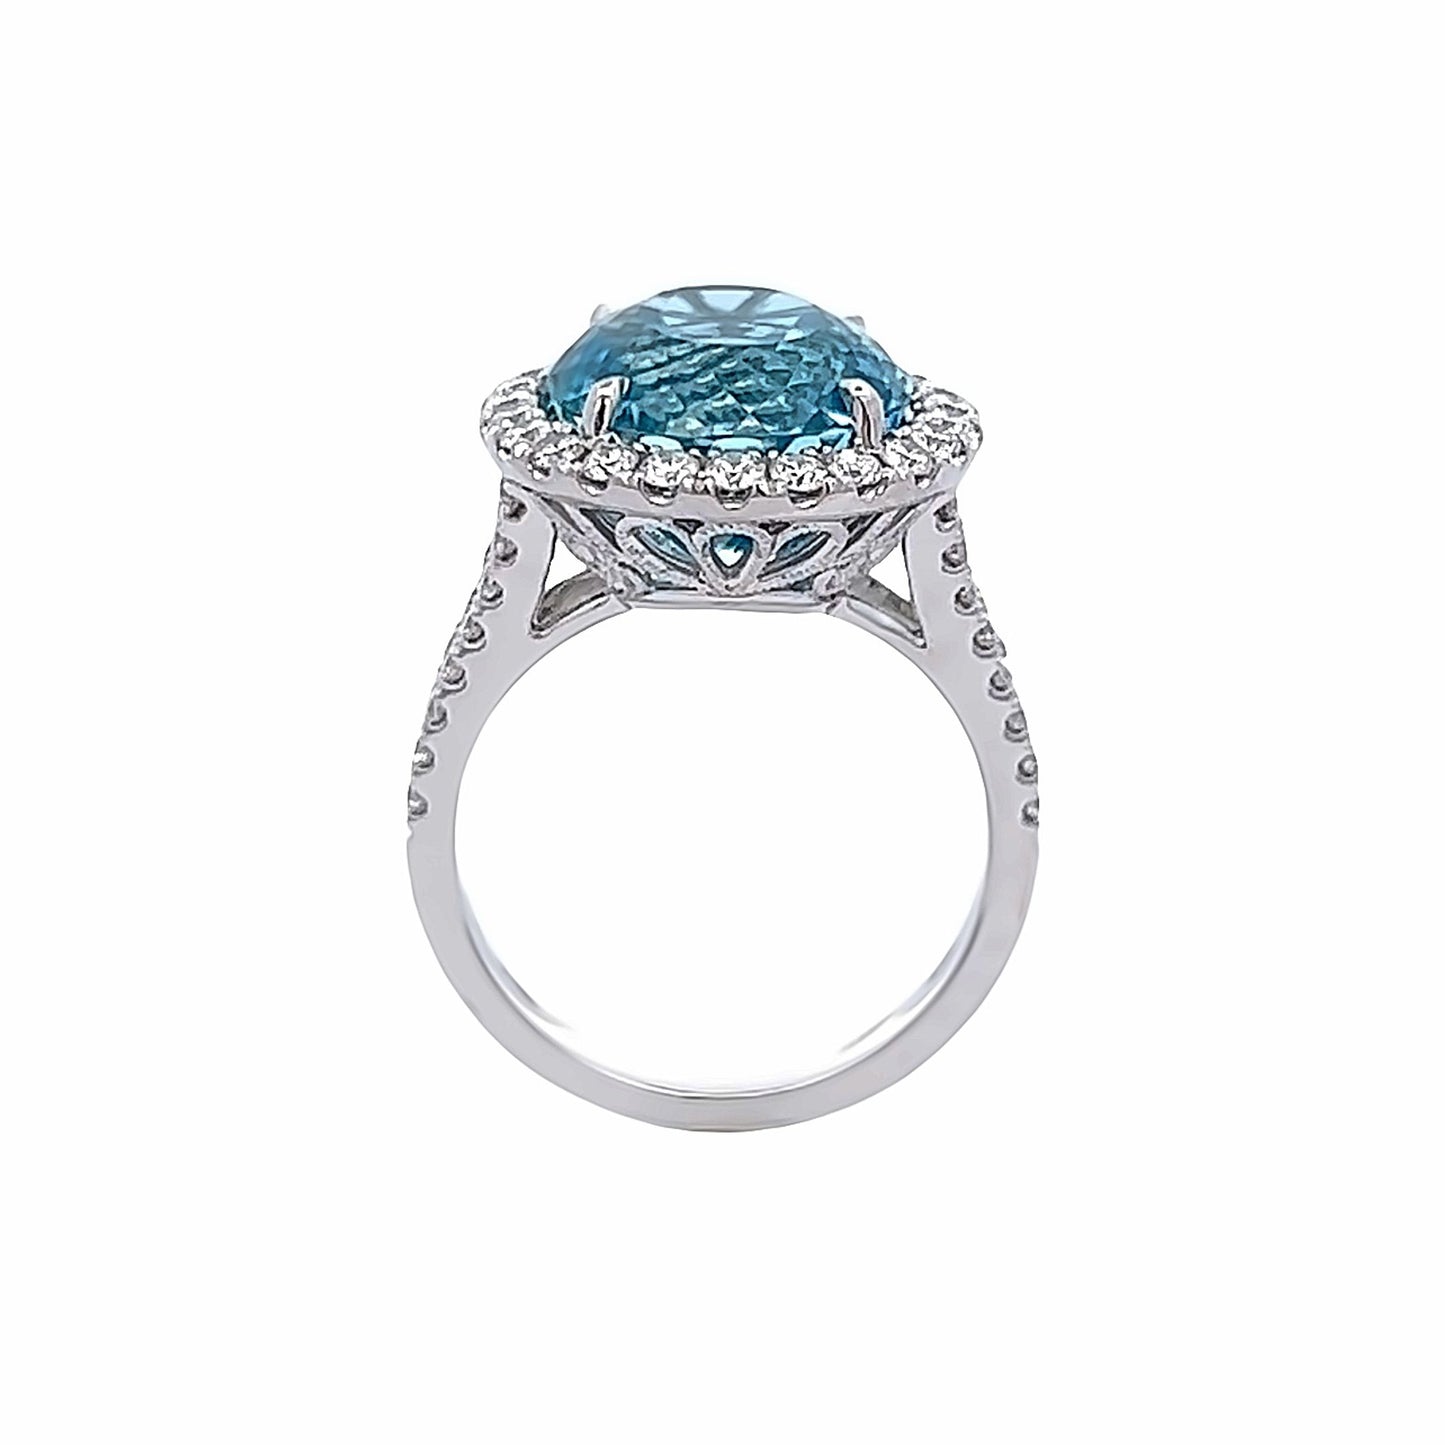 8.20 Cts Oval Aquamarine & Diamond Ring GIA